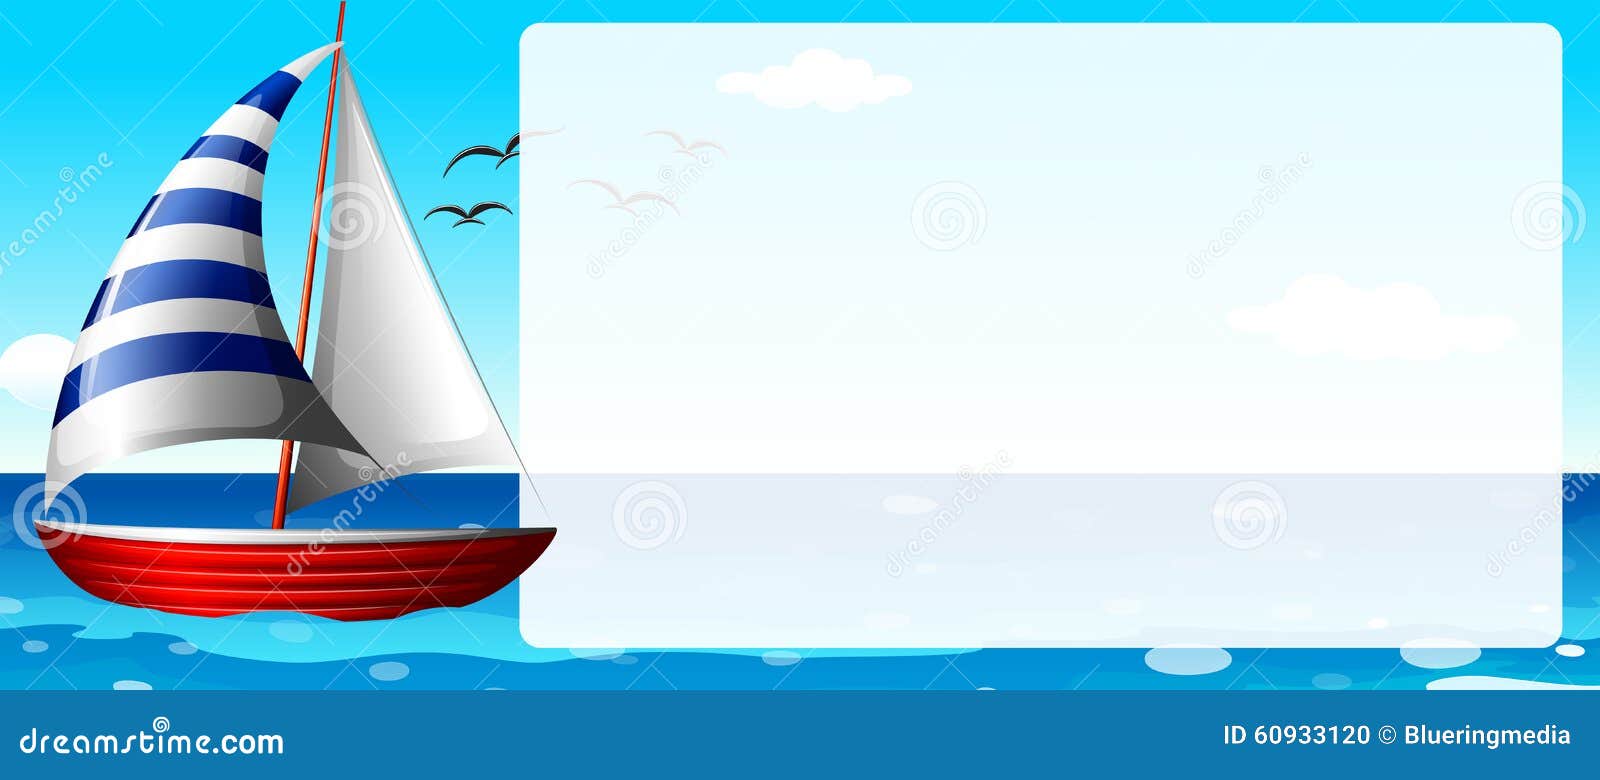 Image Gallery sailboat border